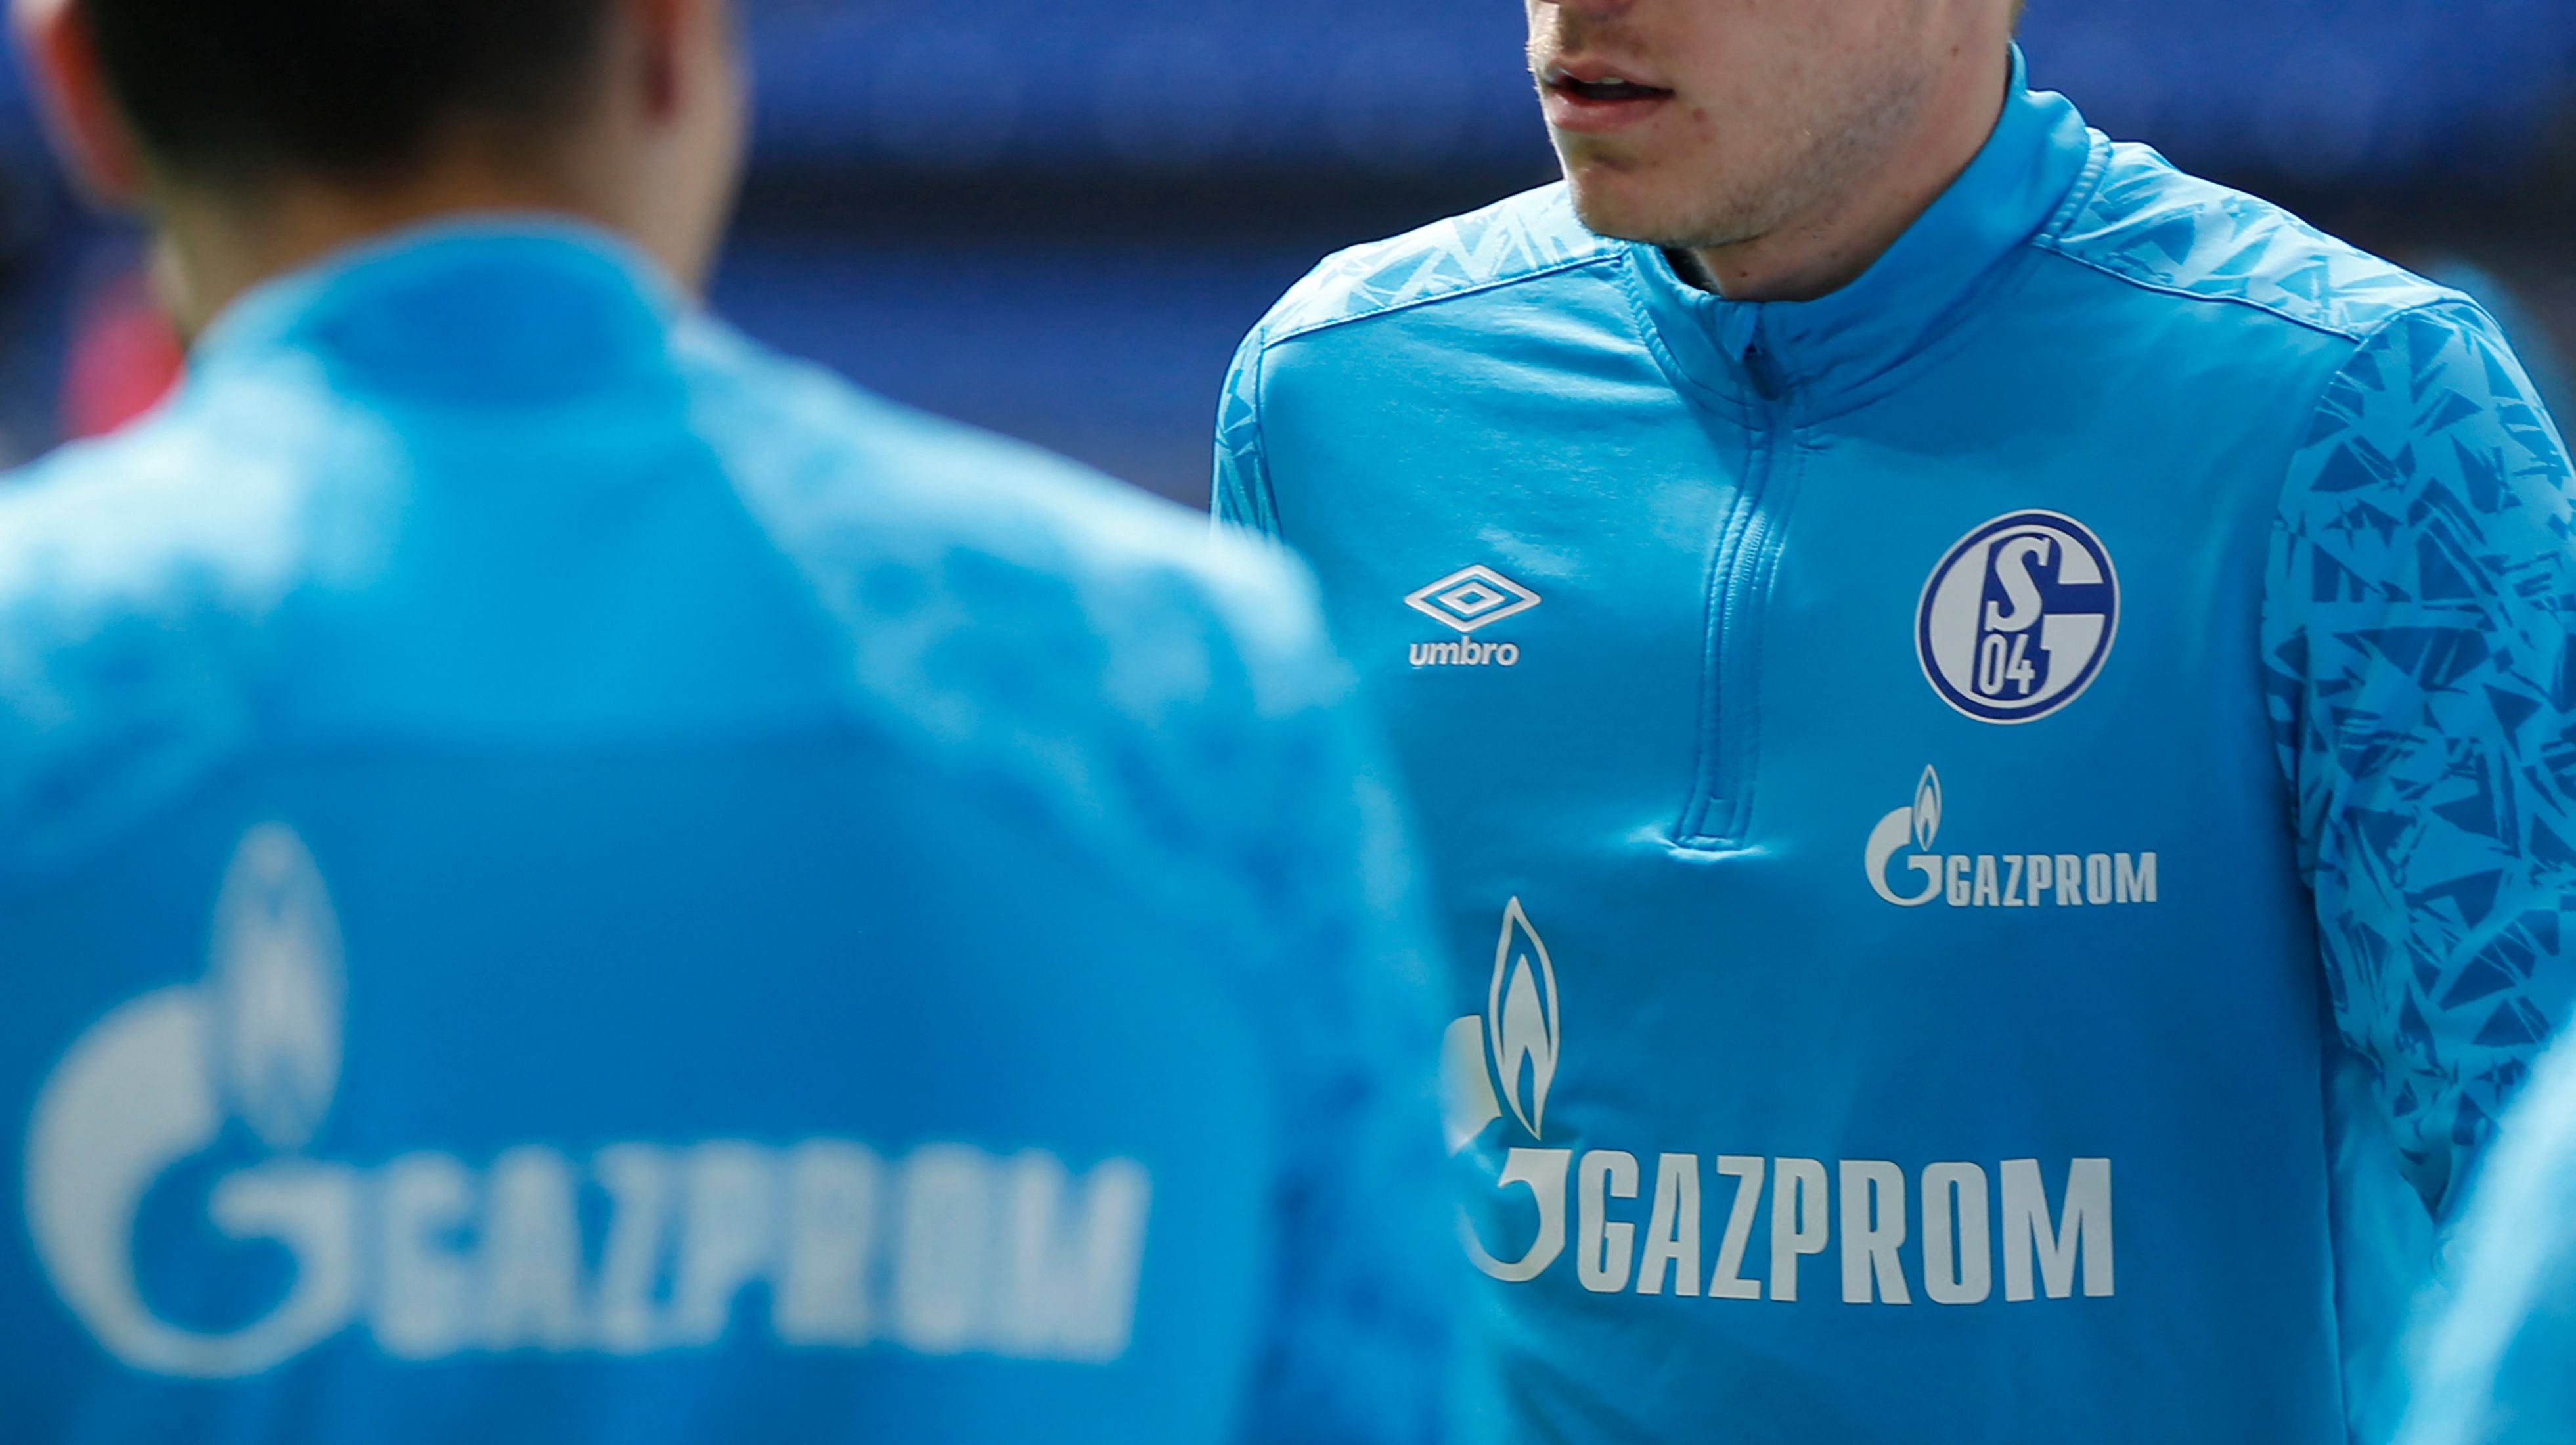 Schalke are sponsored by Gazprom